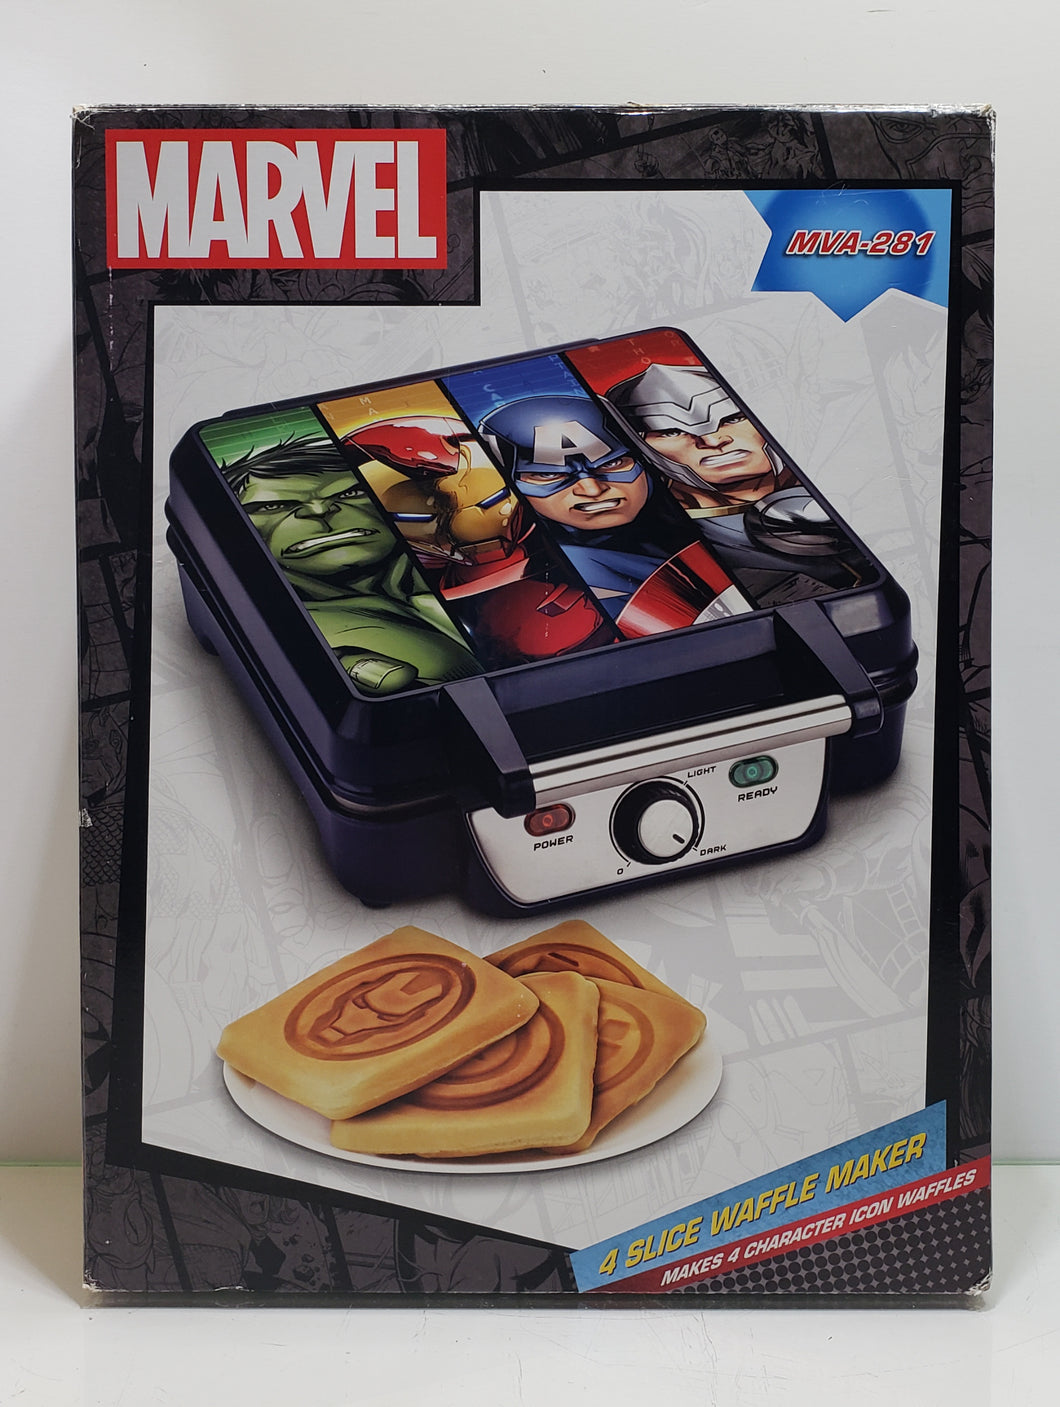 Marvel MVA-281 Waffle Maker, Unit: 13